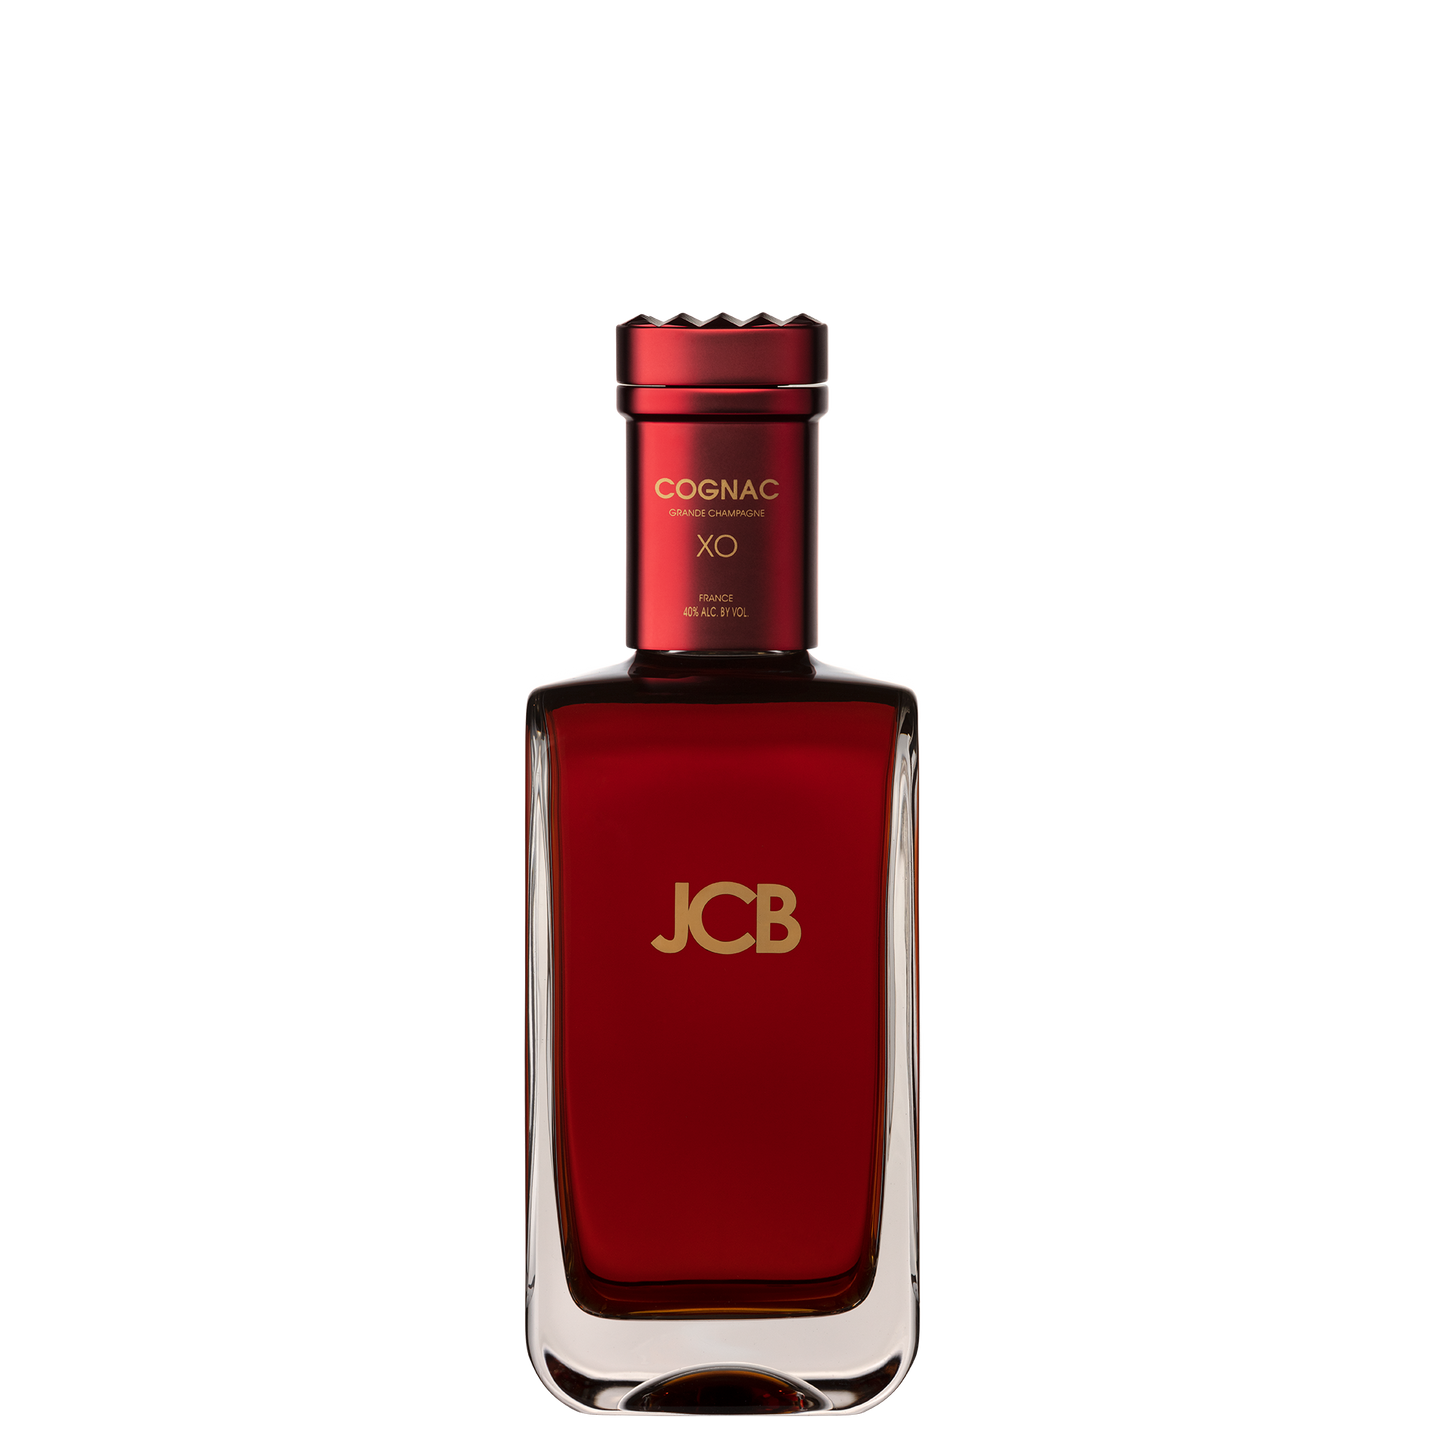 JCB XO Cognac